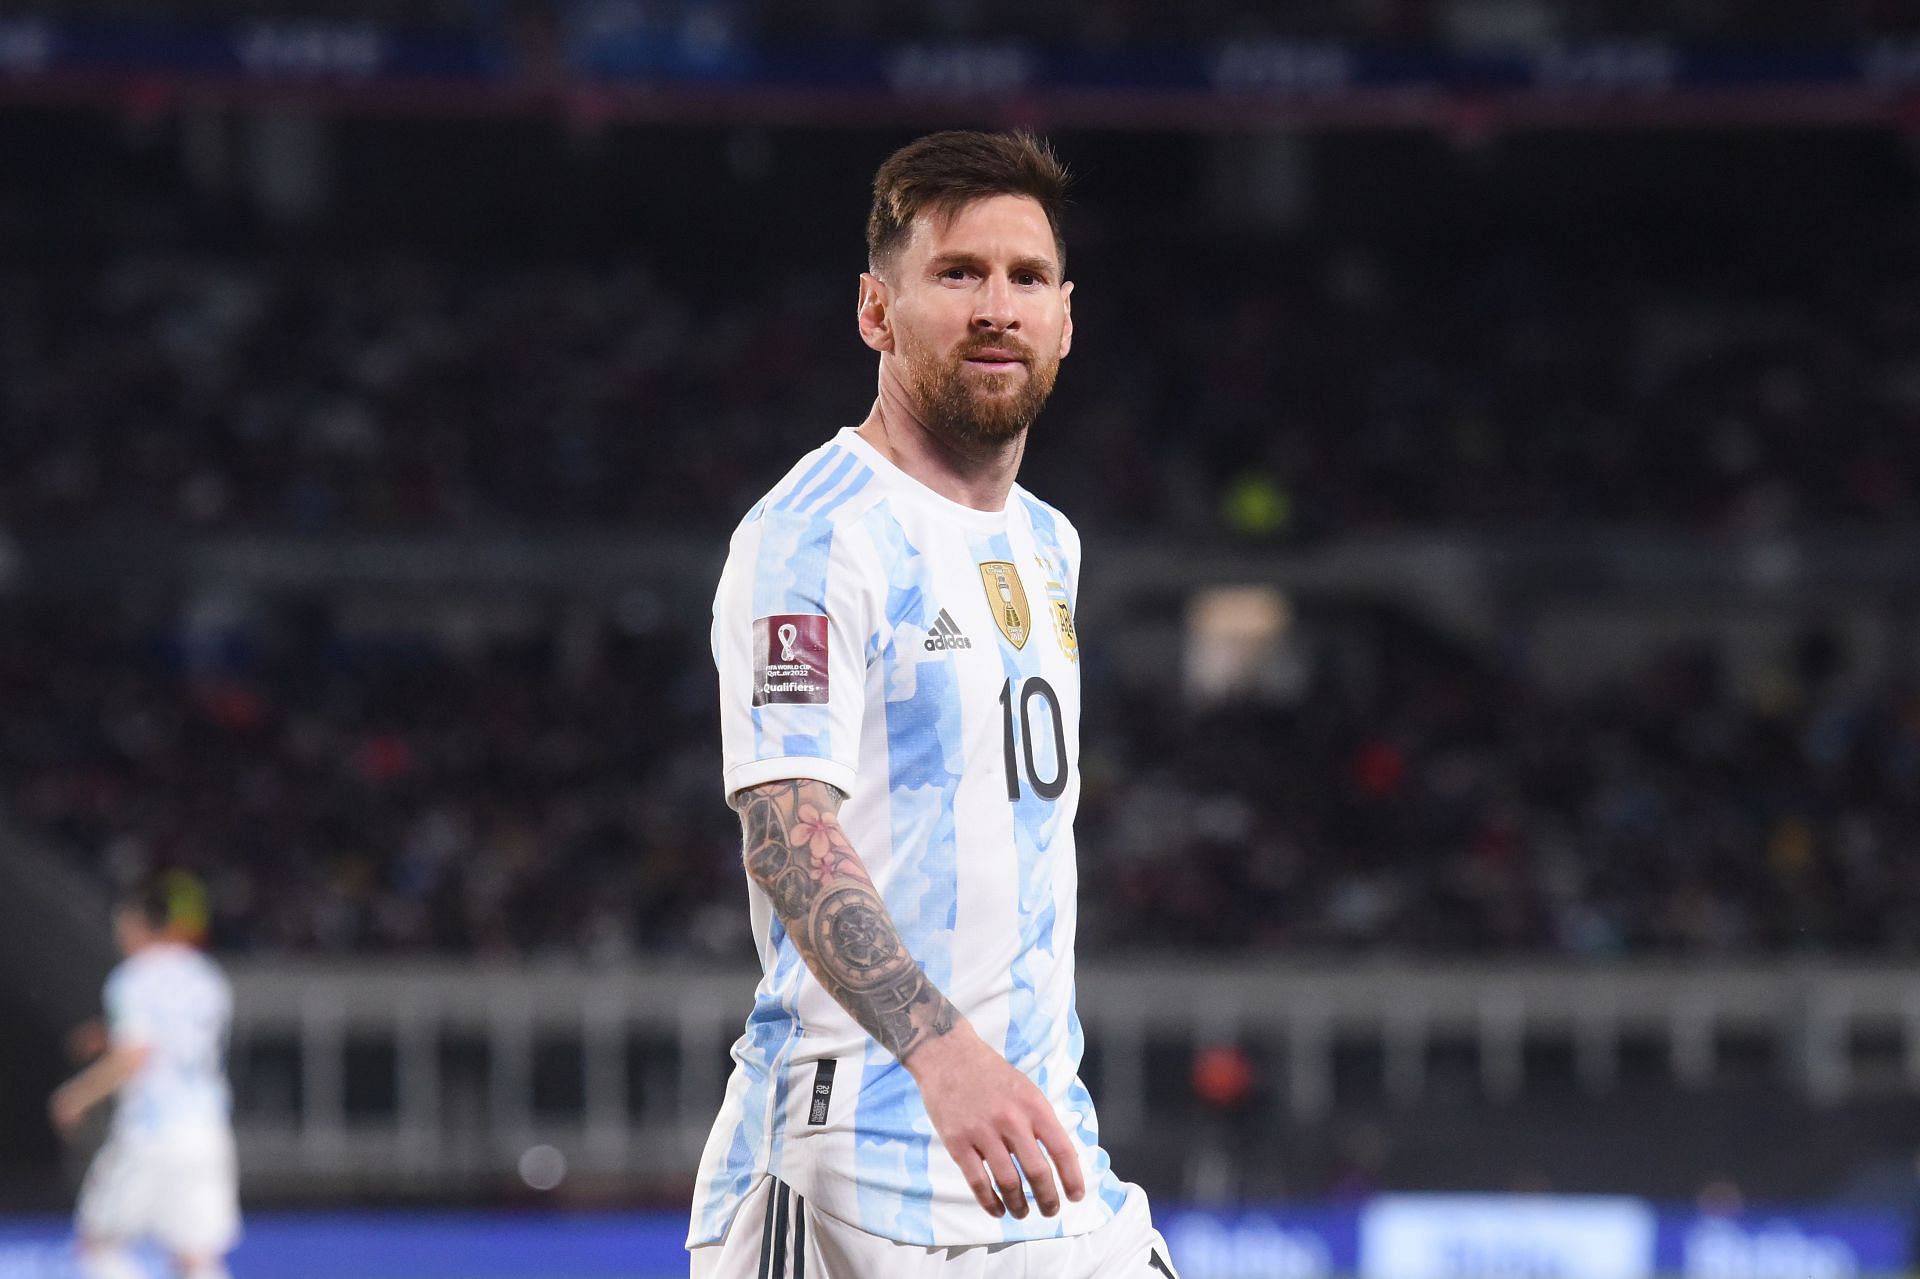 Lionel Messi won an international trophy in 2021